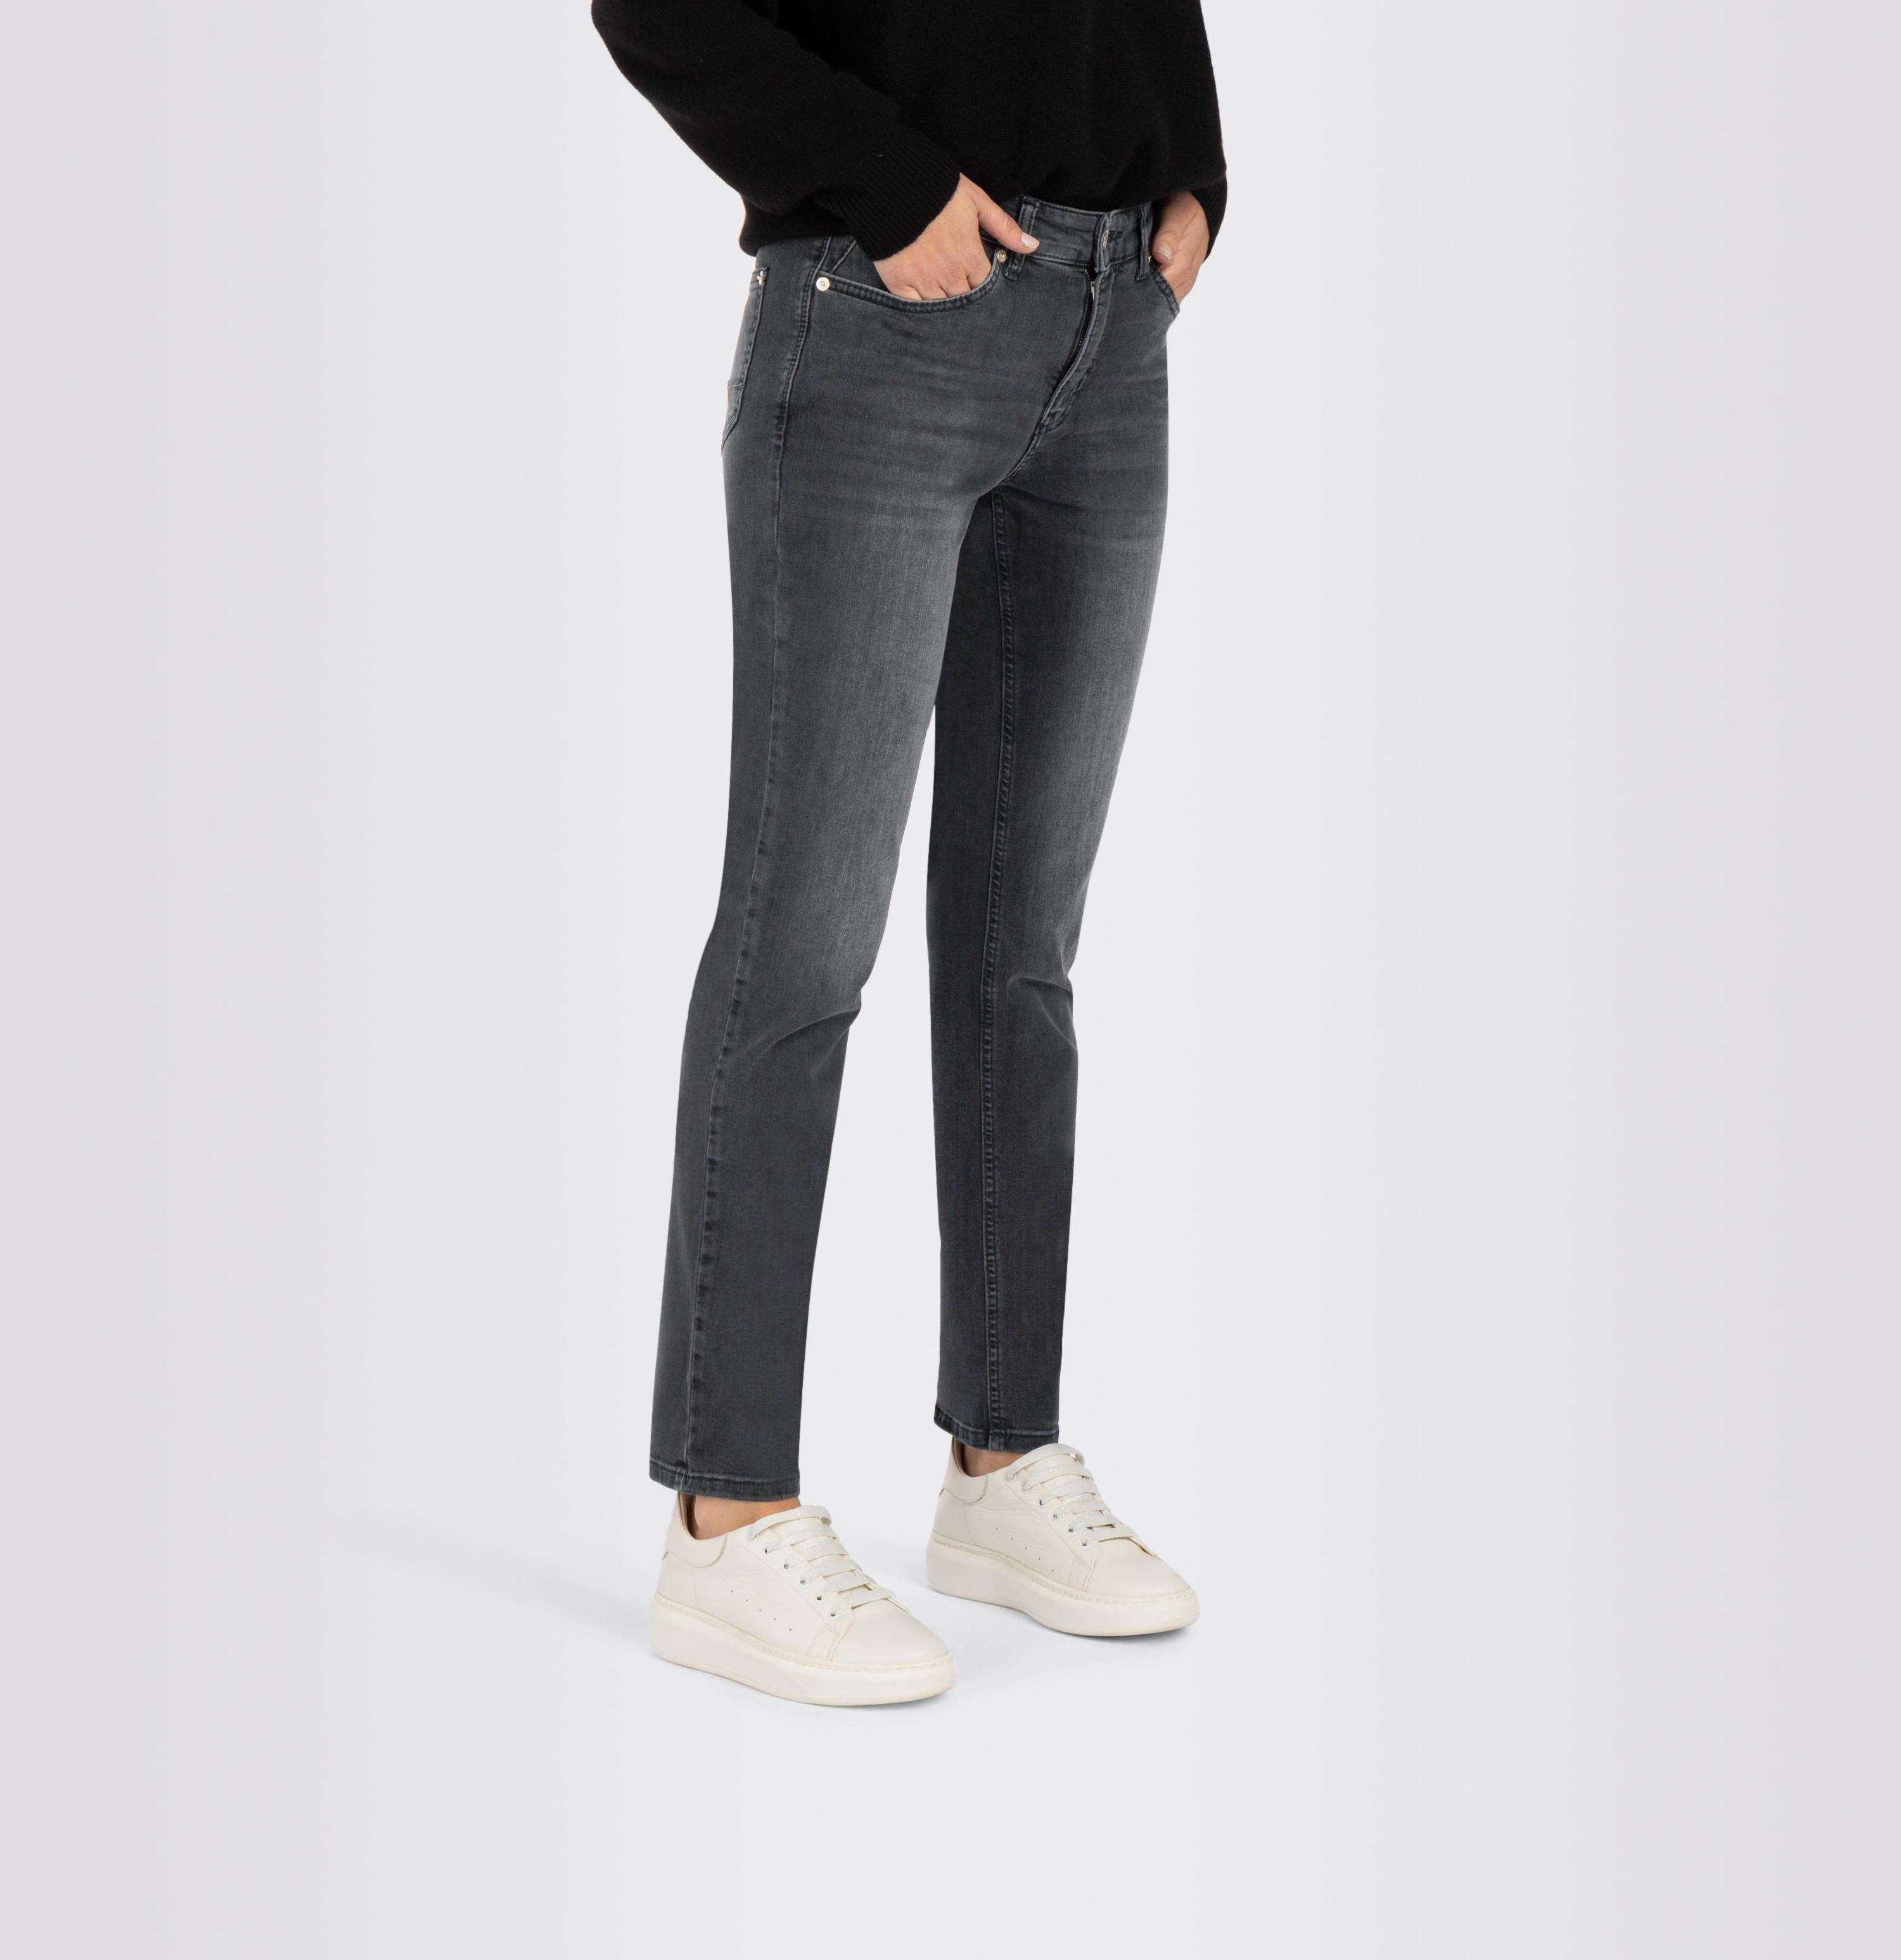 Women Pants, Melanie, Jeans Shop Perfect Fit, | FI D933 - grey MAC